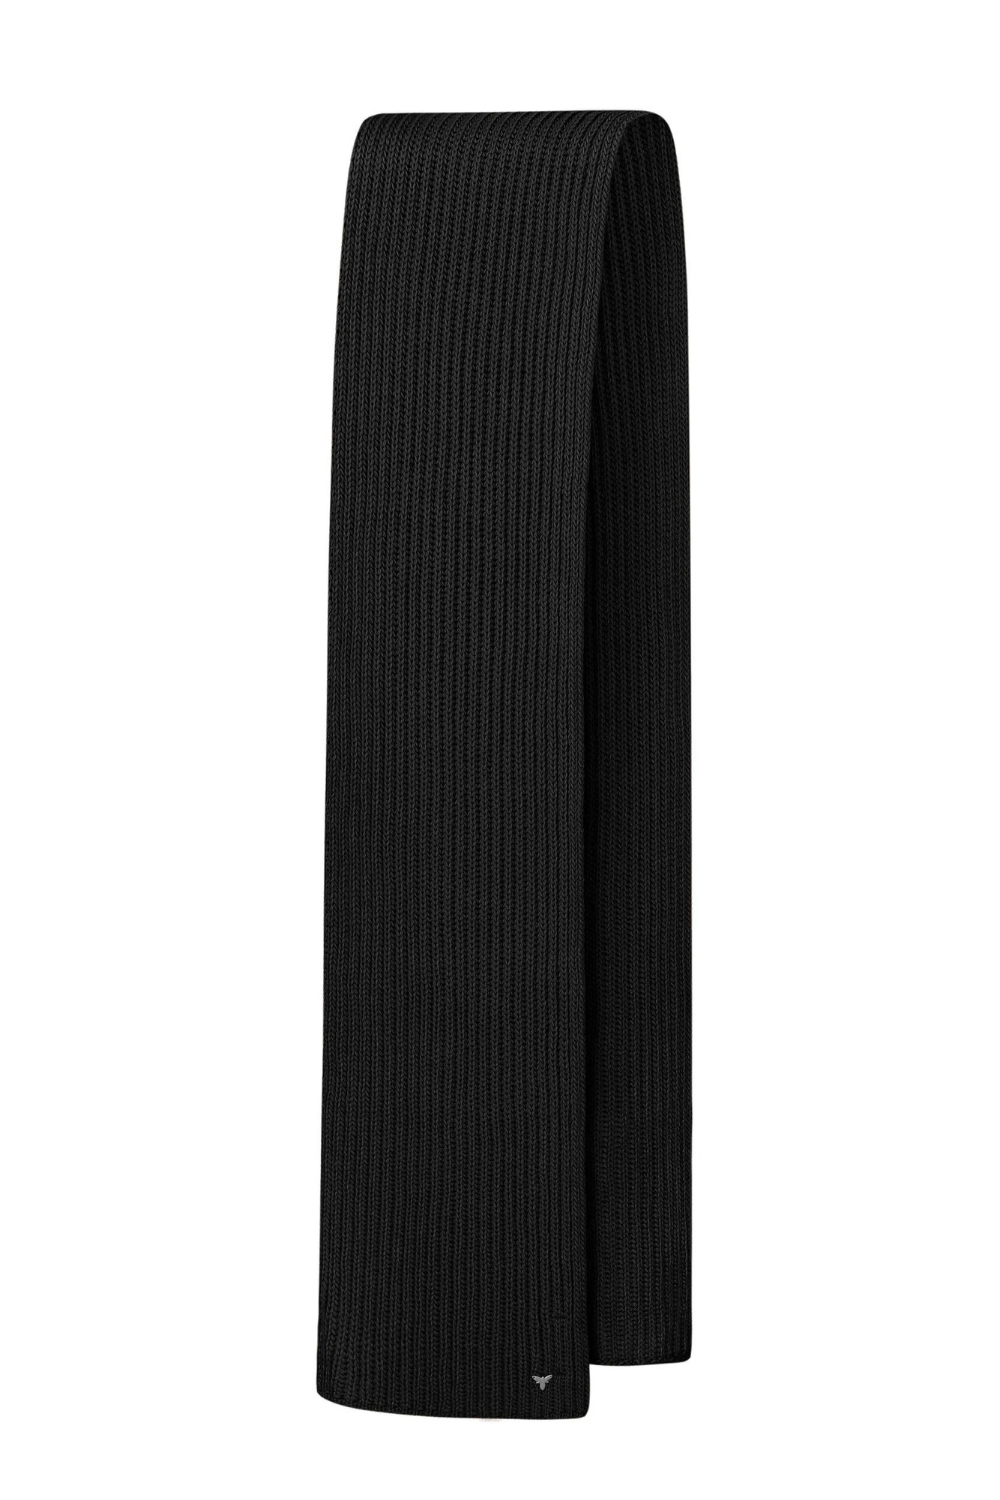 Knitted scarf black (T.Mosca) ScarfMR23-01